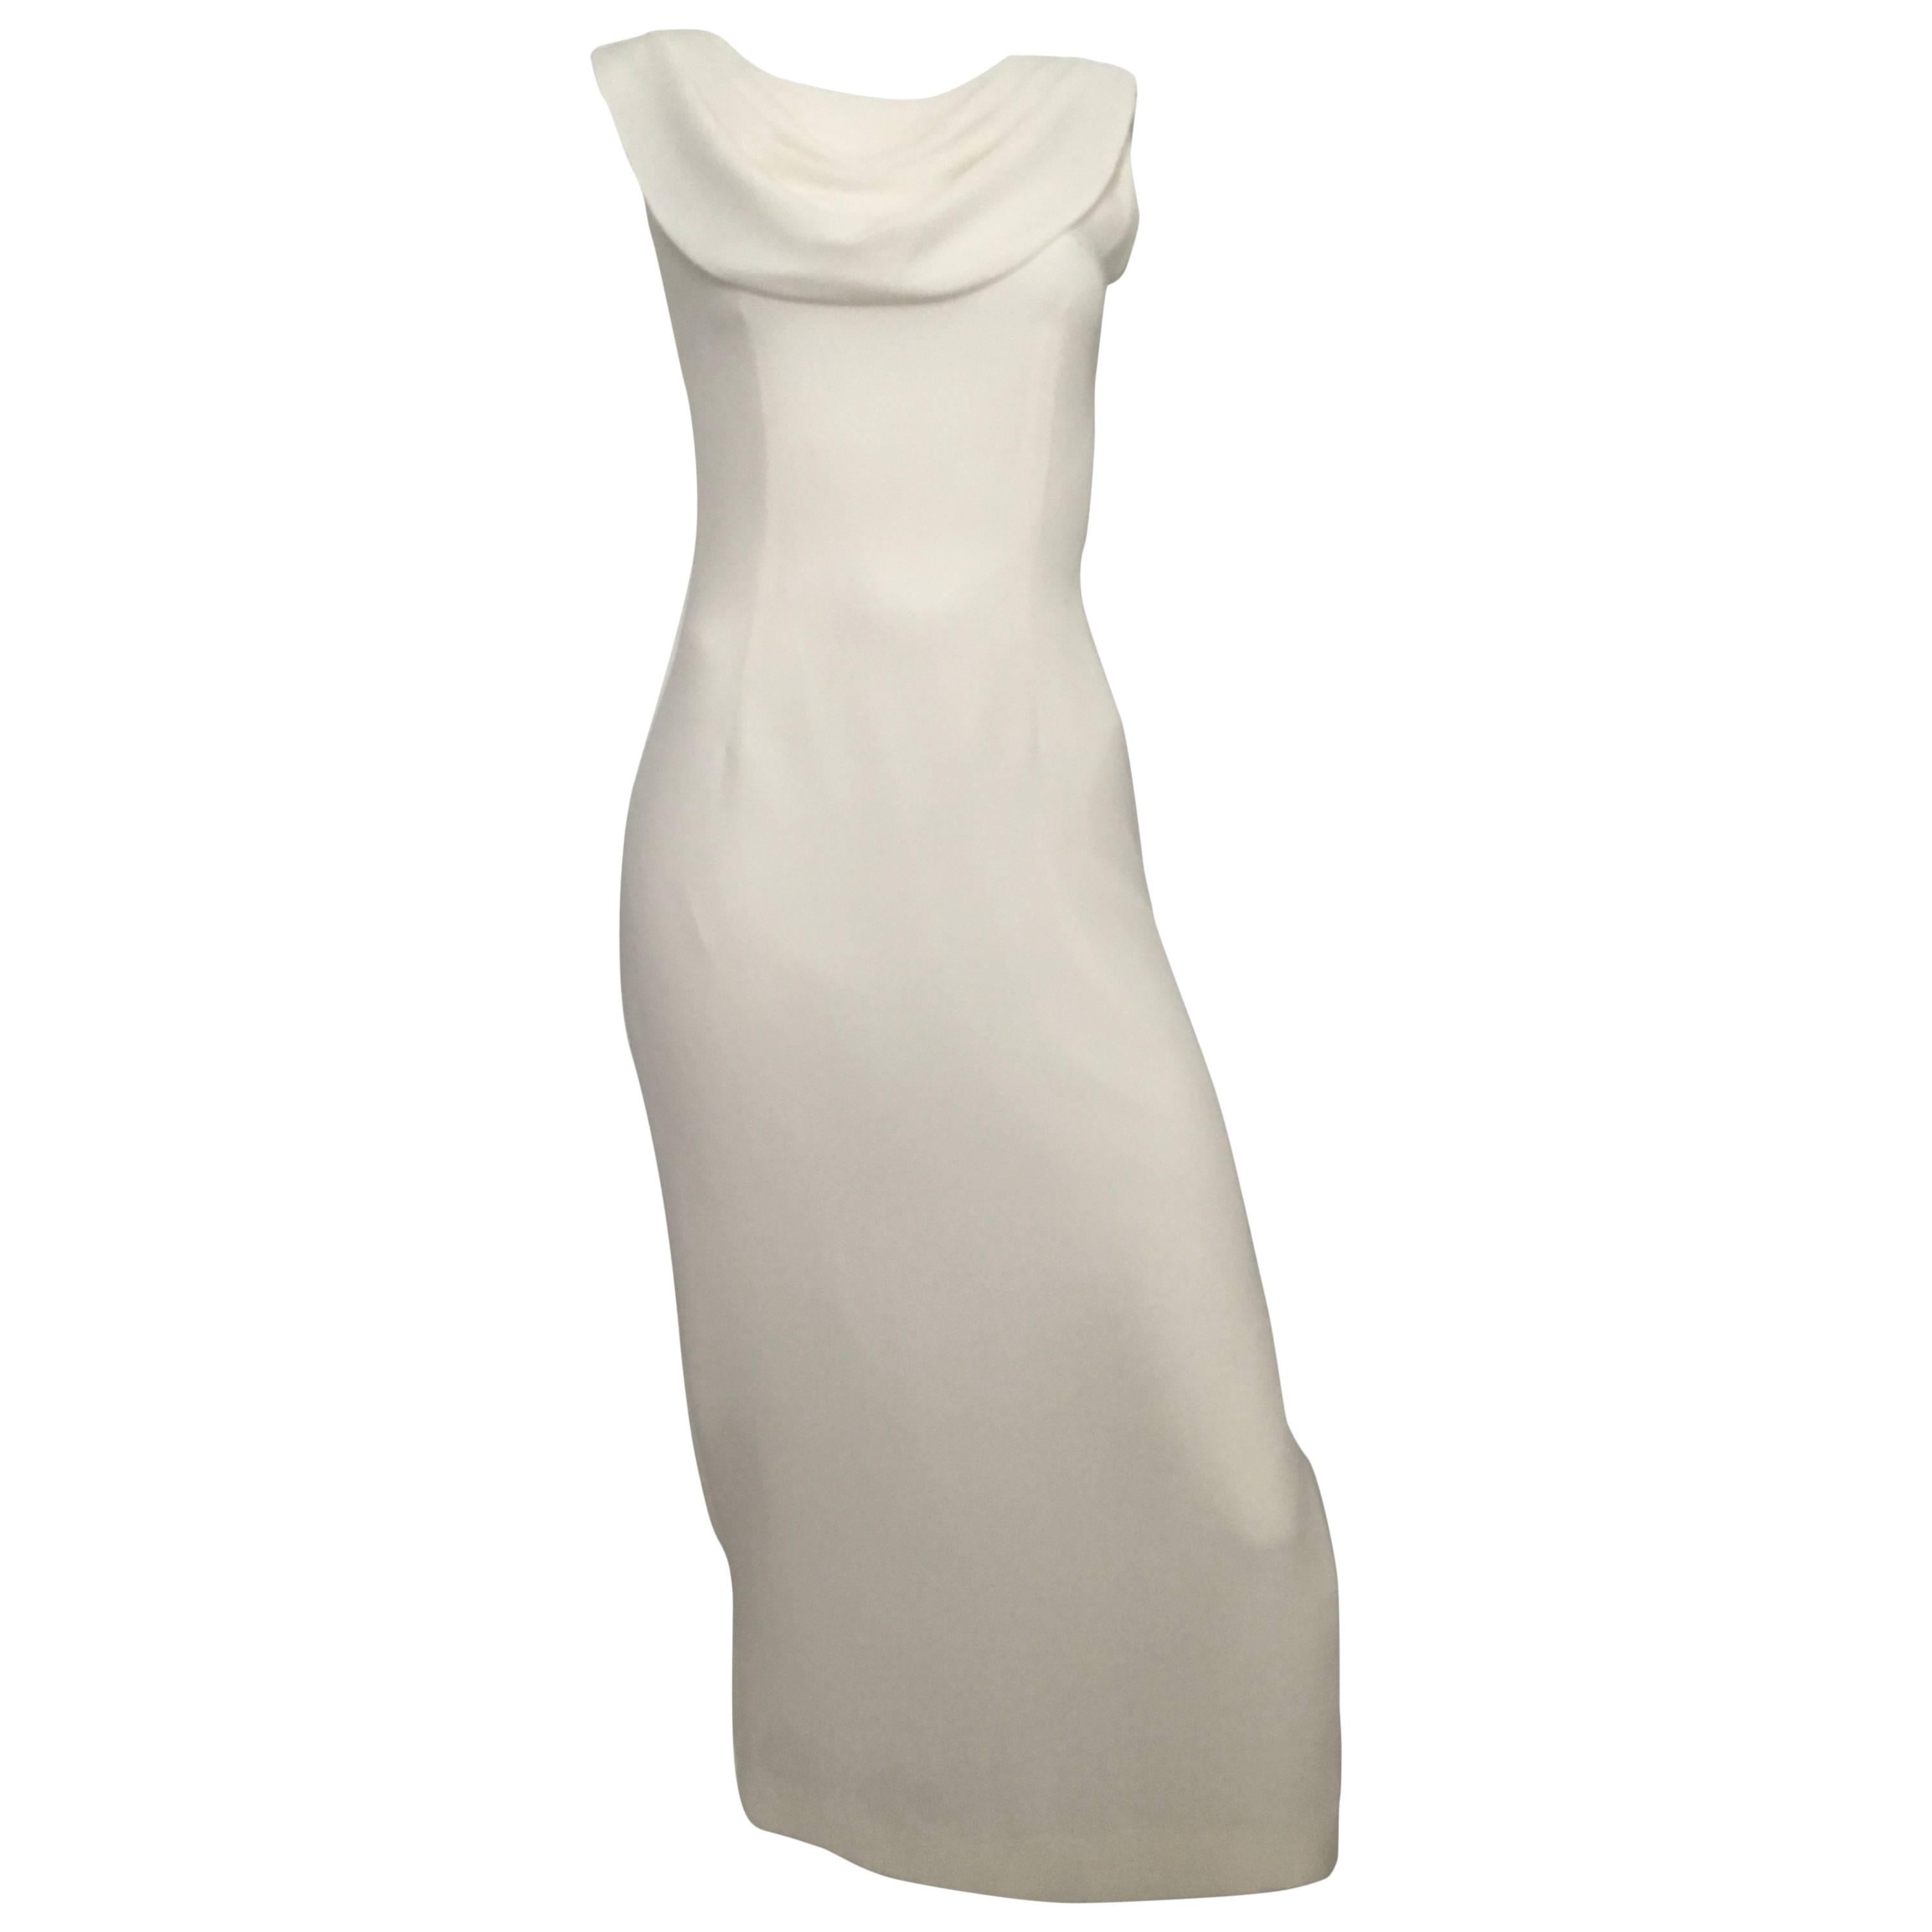 Scaasi Off White Long Sheath Evening Dress Size 4.